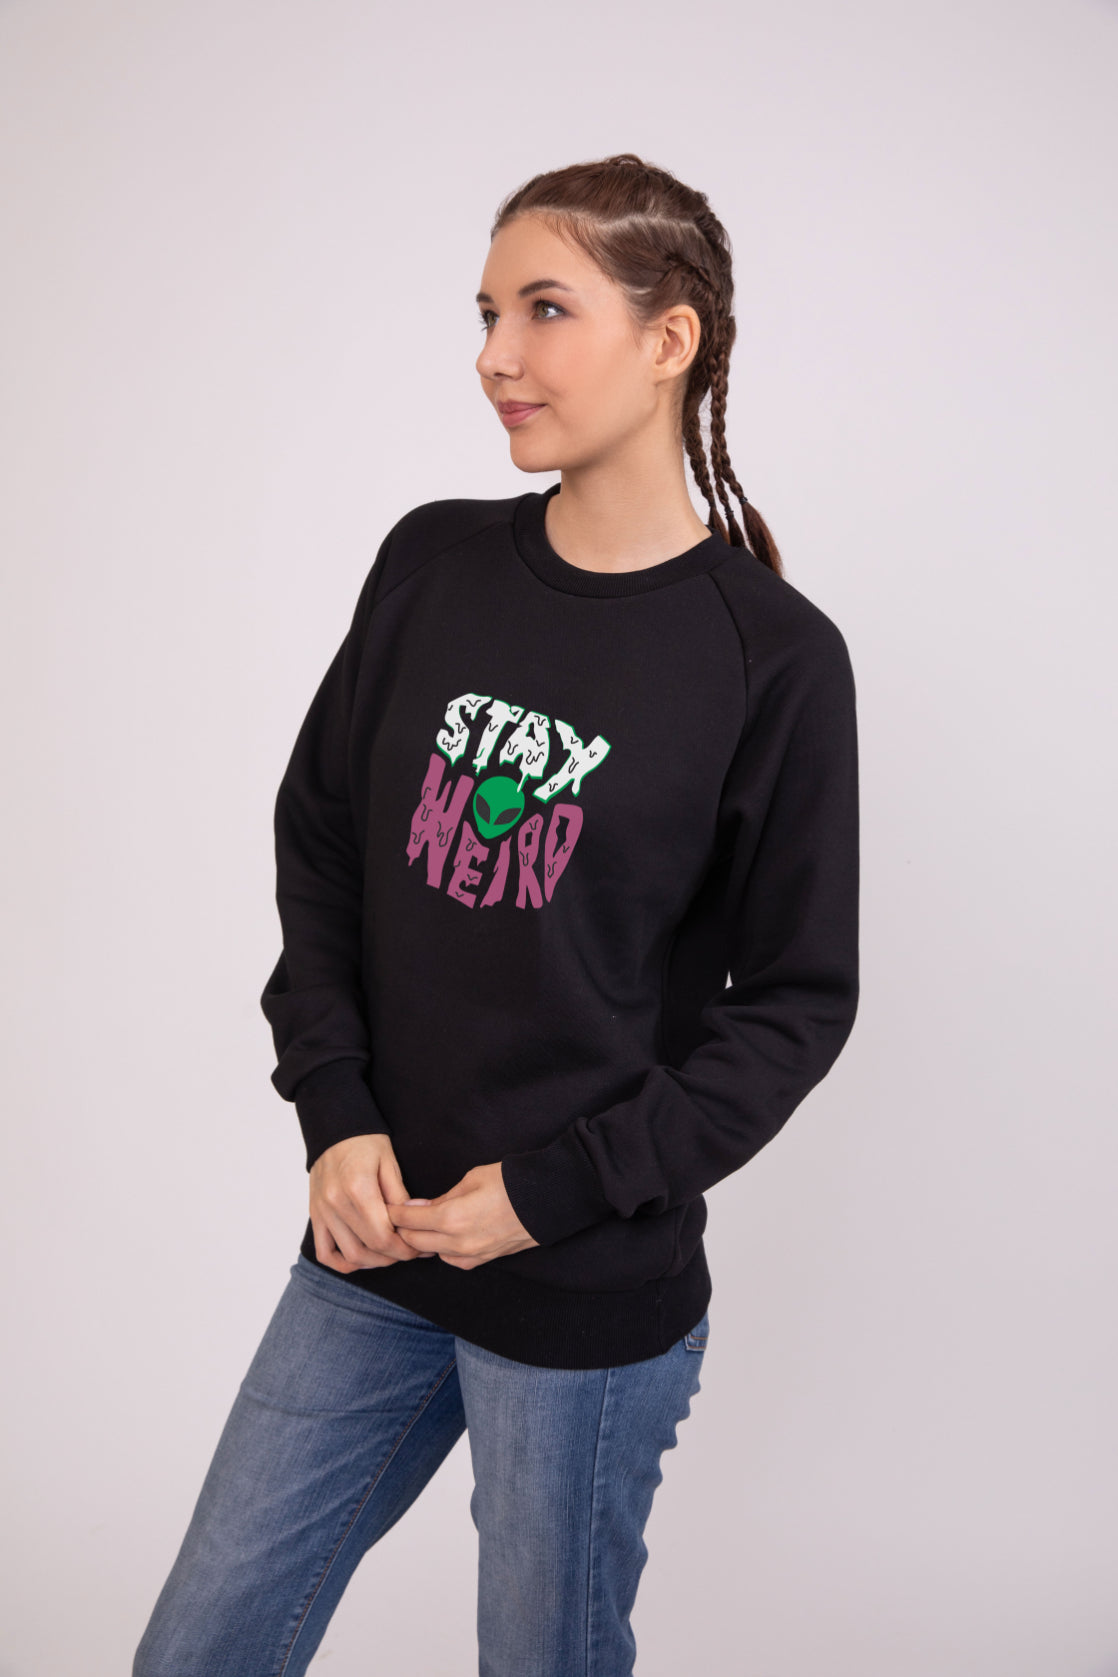 Stay Weird Black - Printed Sweatshirt